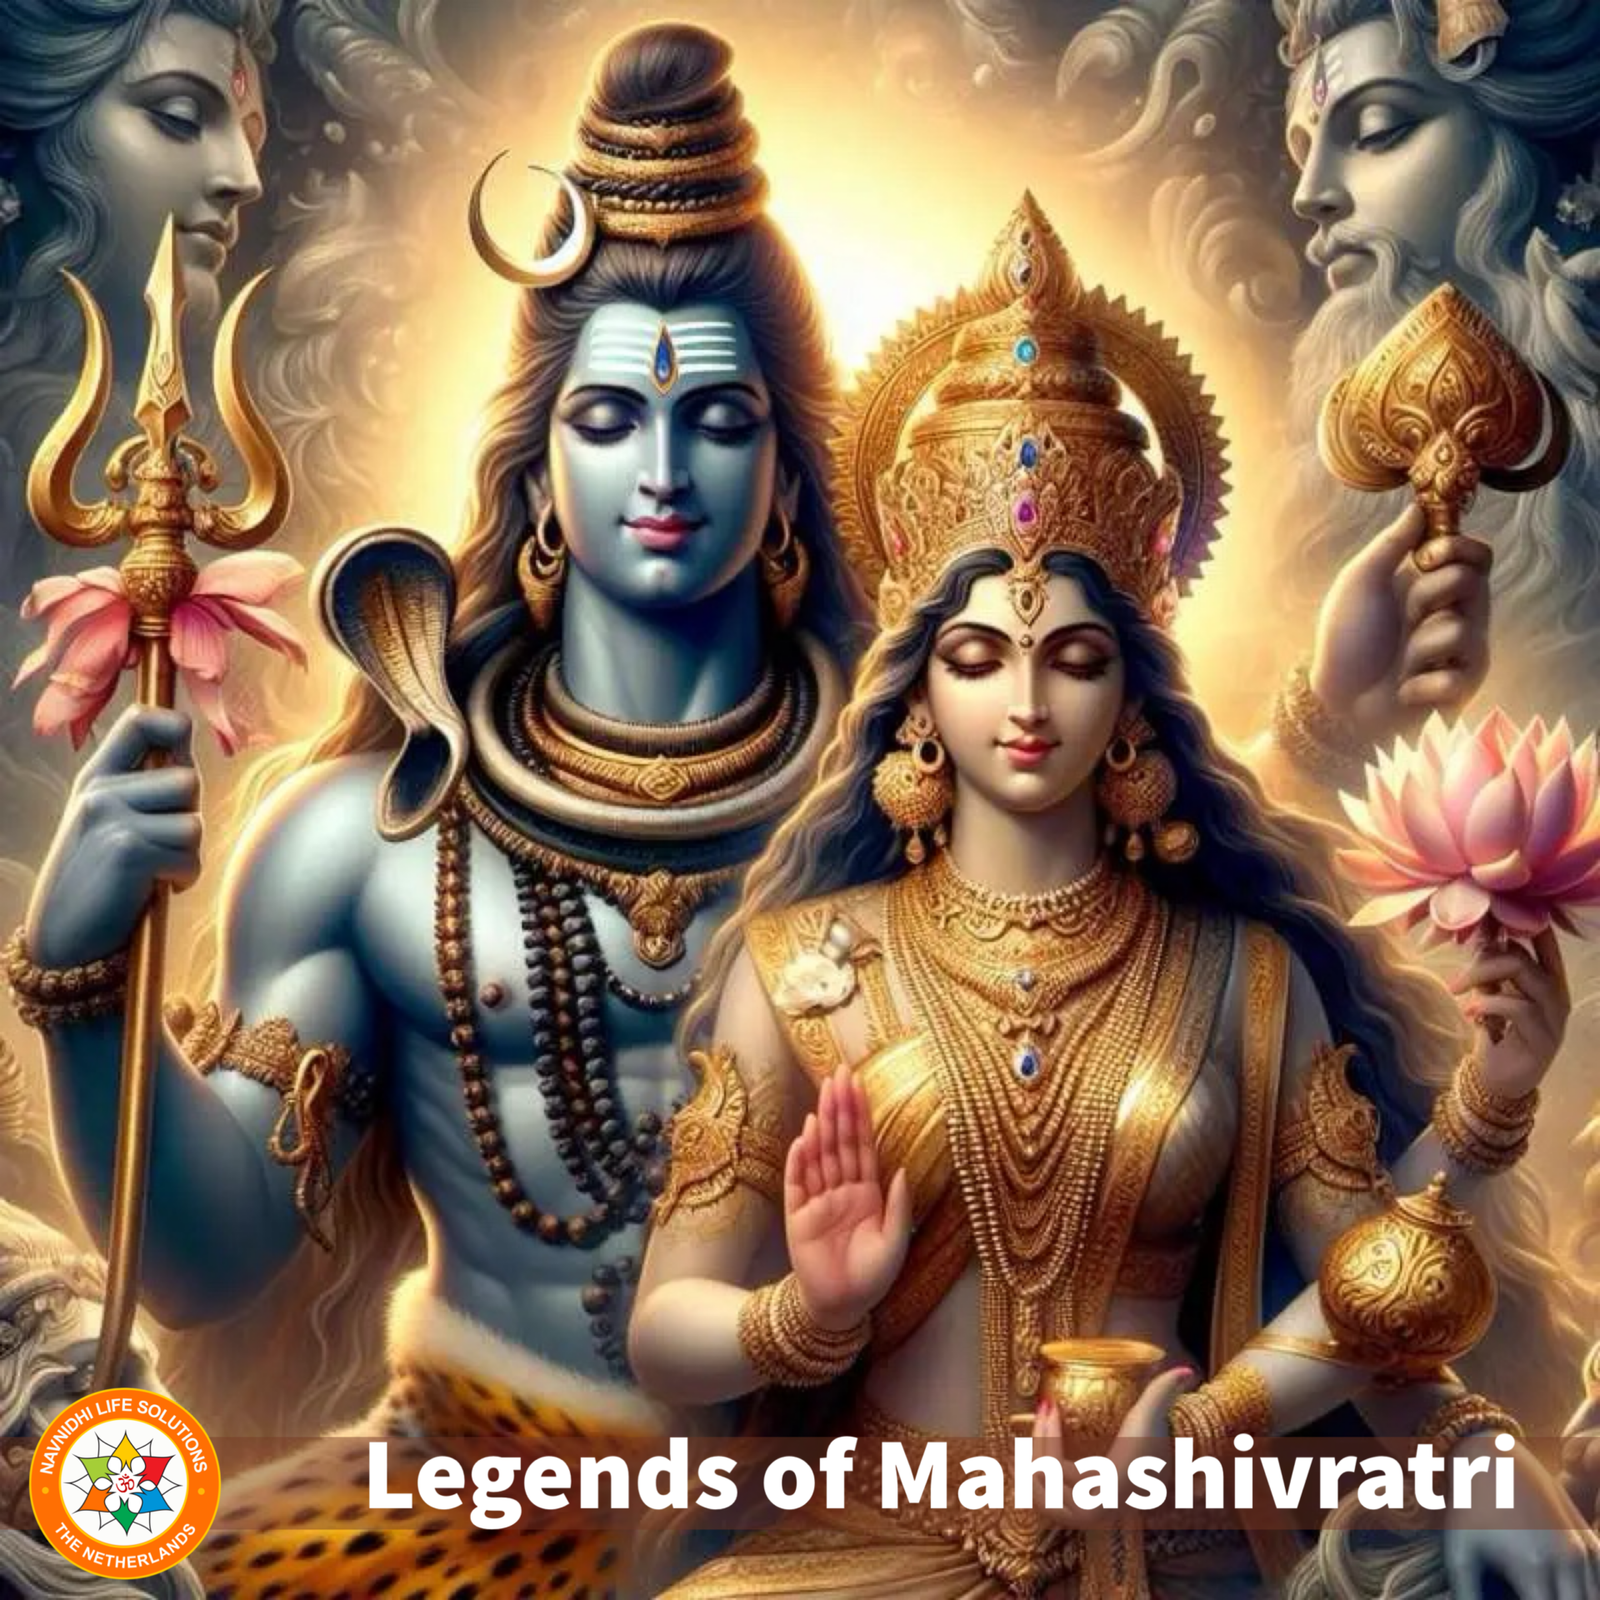 6 incredible MahaShivratri legends of your unconditional faith